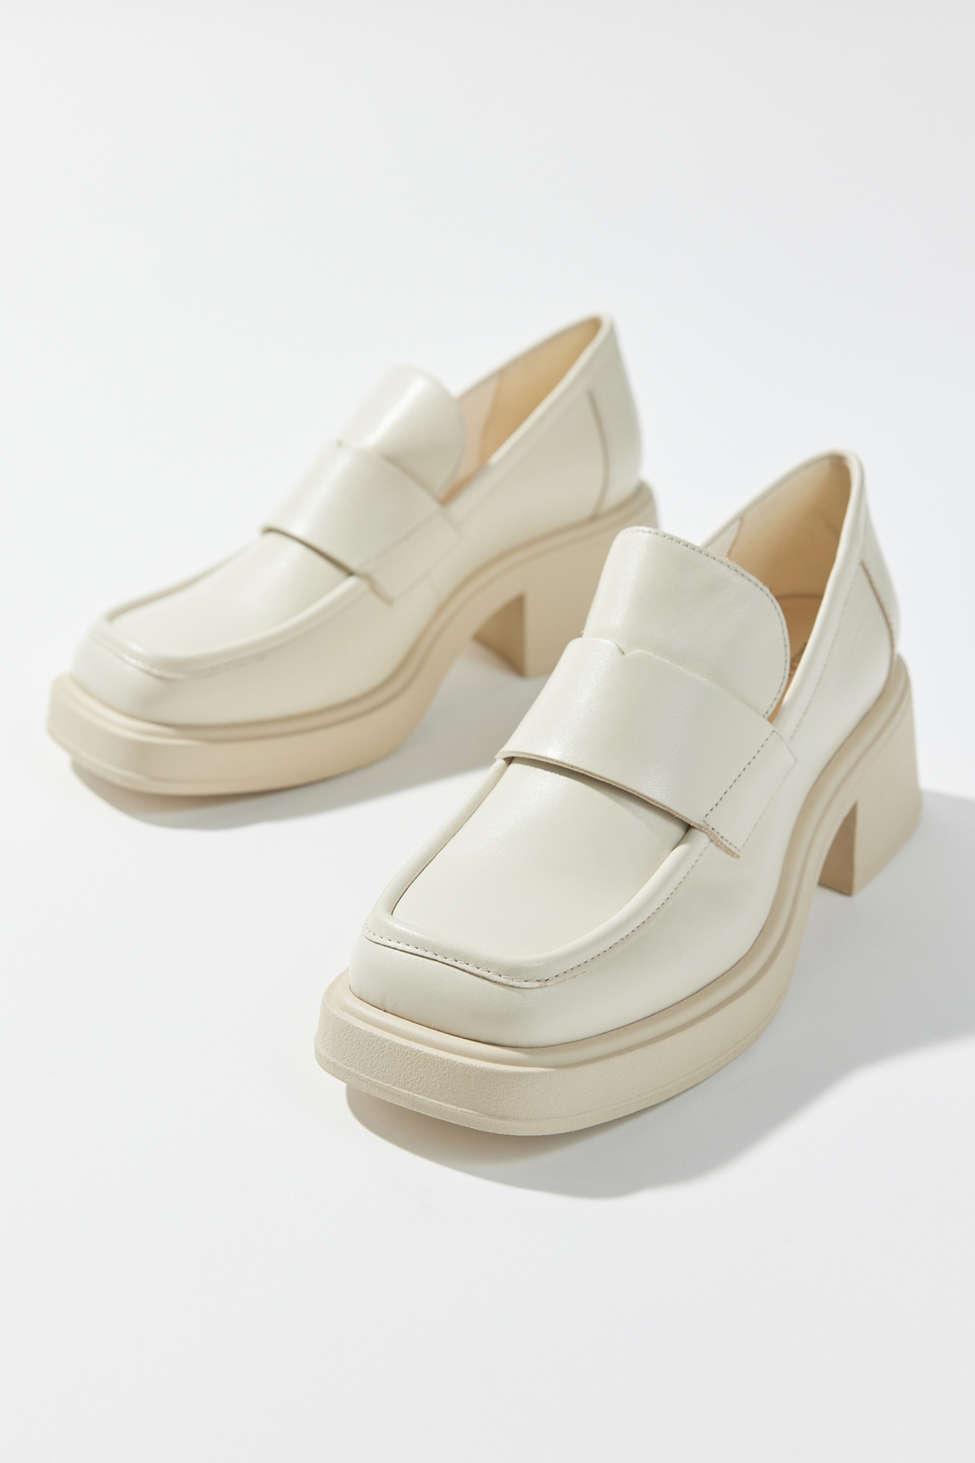 Vagabond Shoemakers Dorah Heeled Loafer in White | Lyst